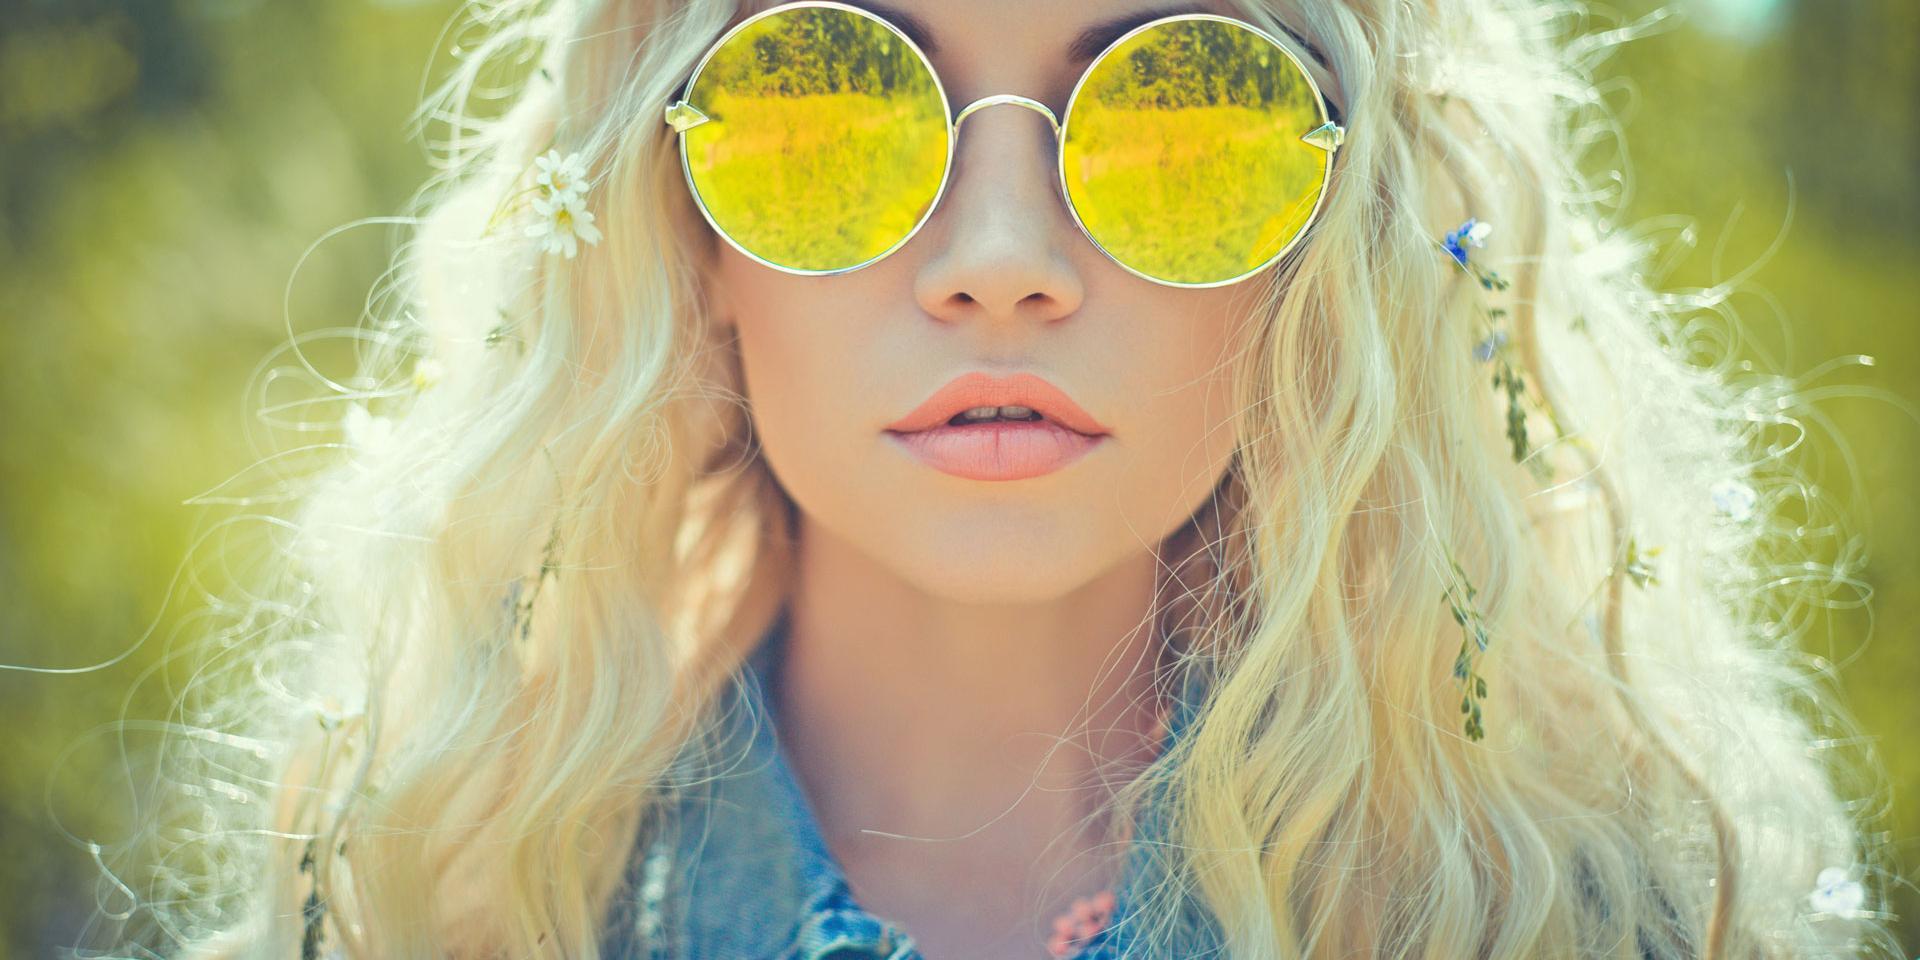 Do yellow lenses make people happier?